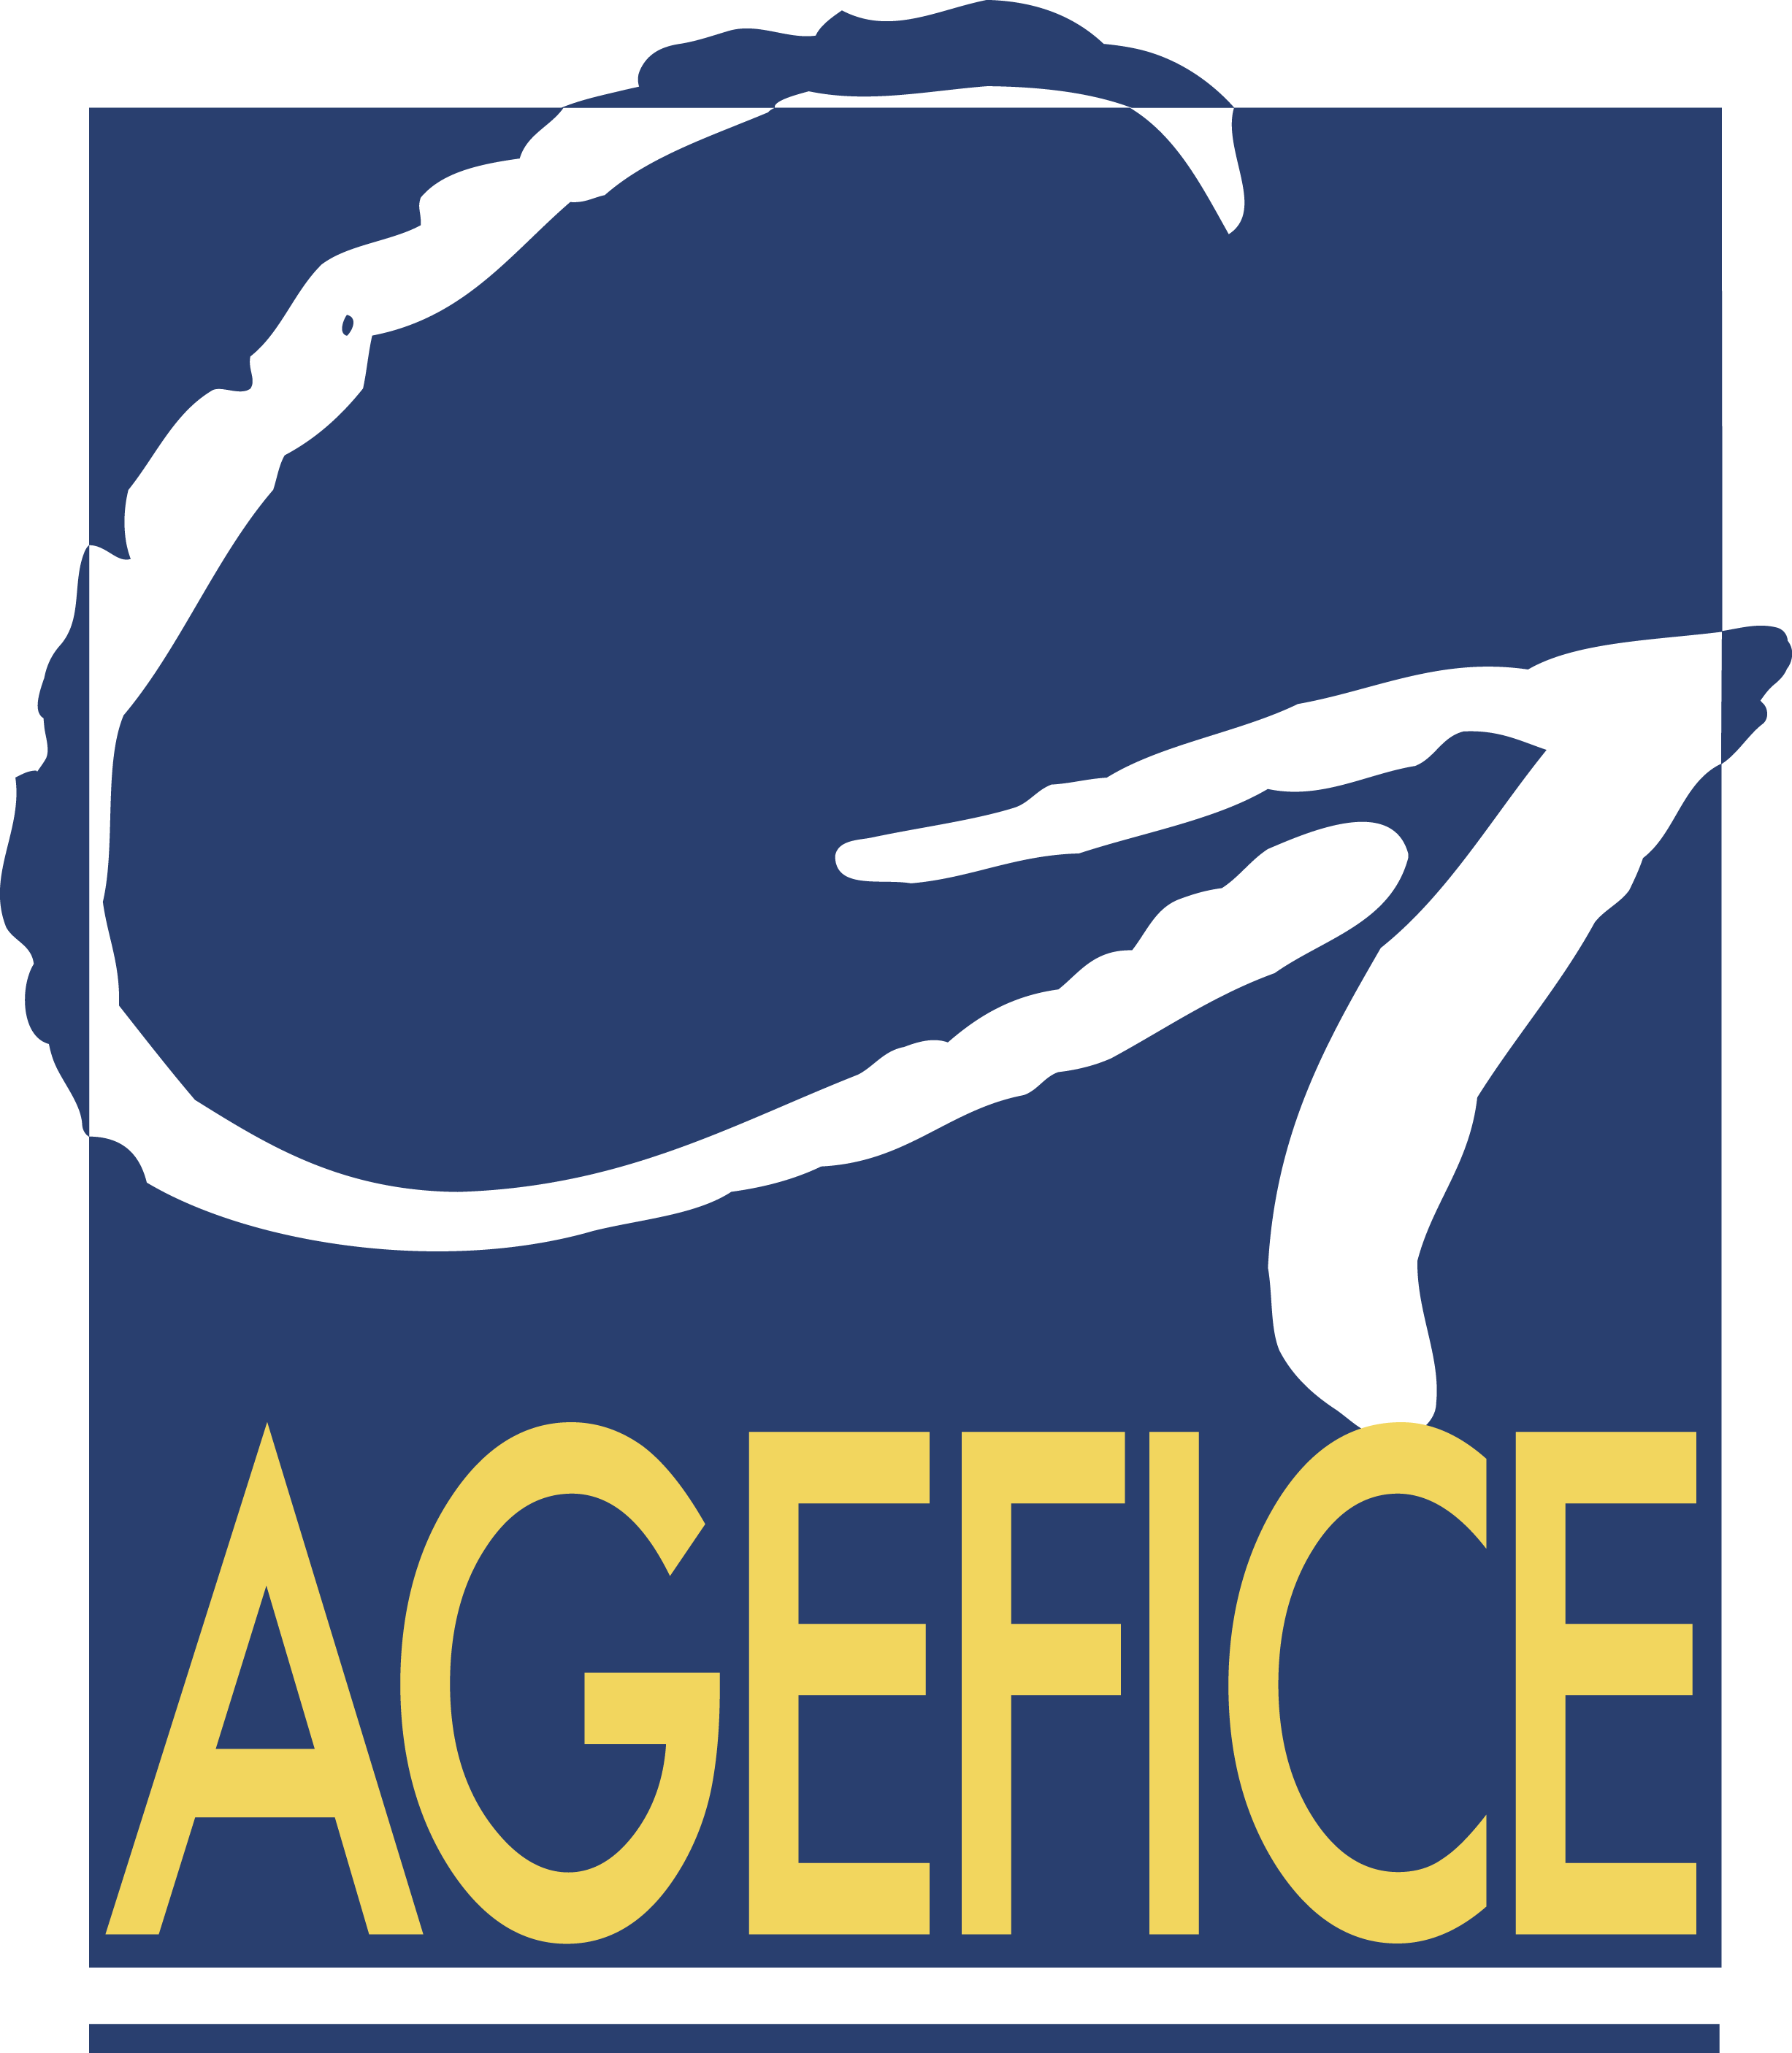 Logo AGEFICE